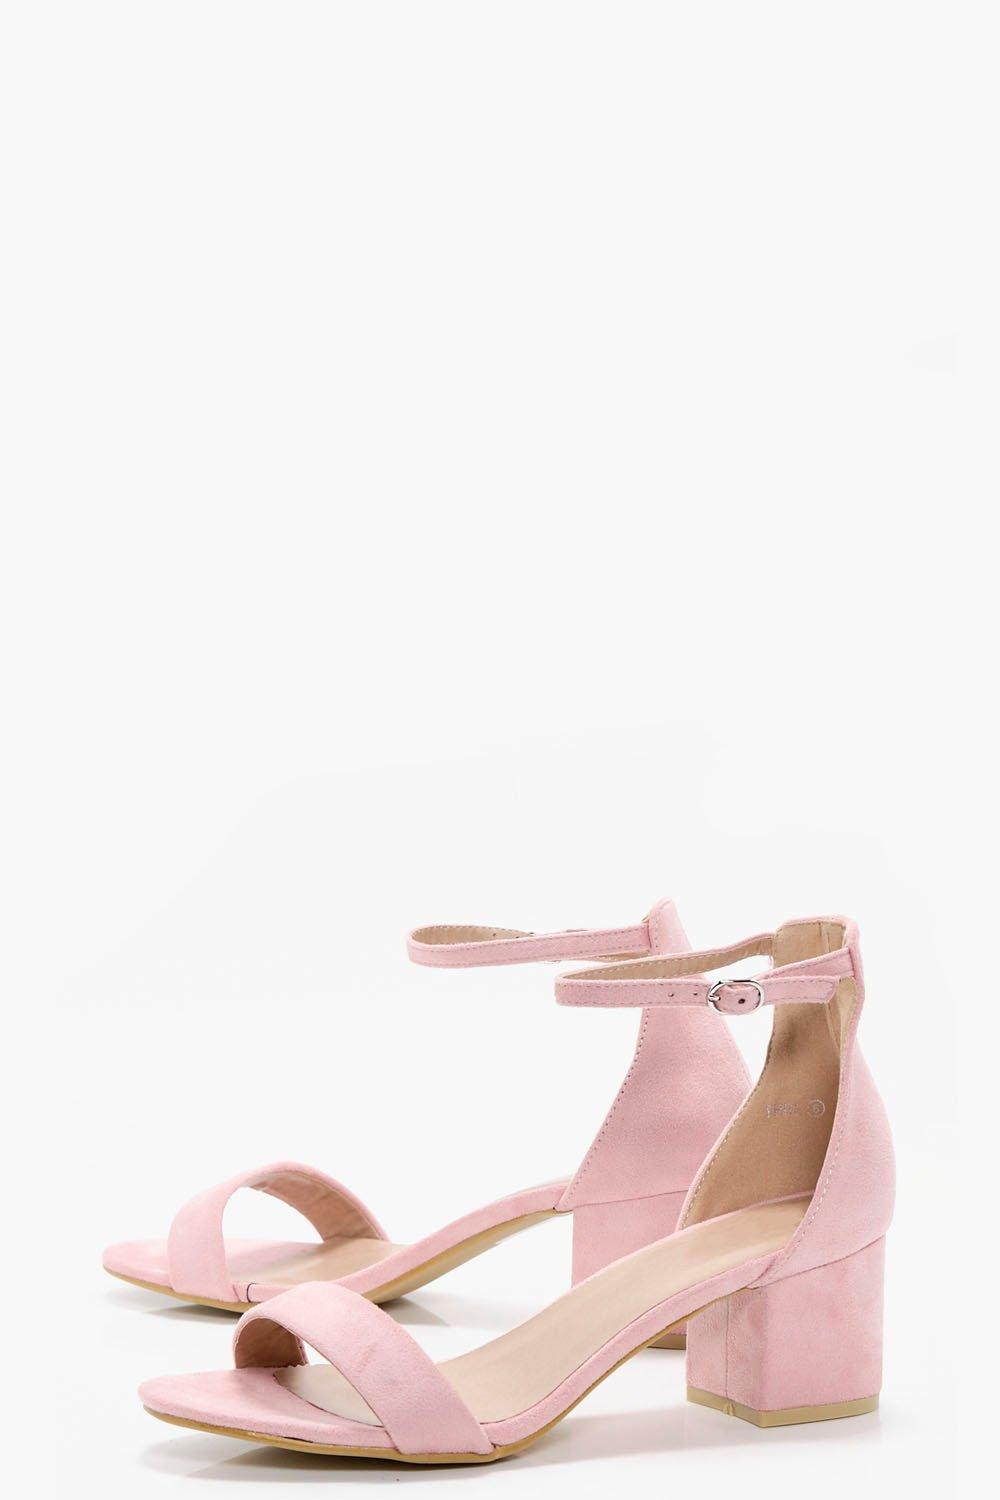 scarpe rosa tacco basso